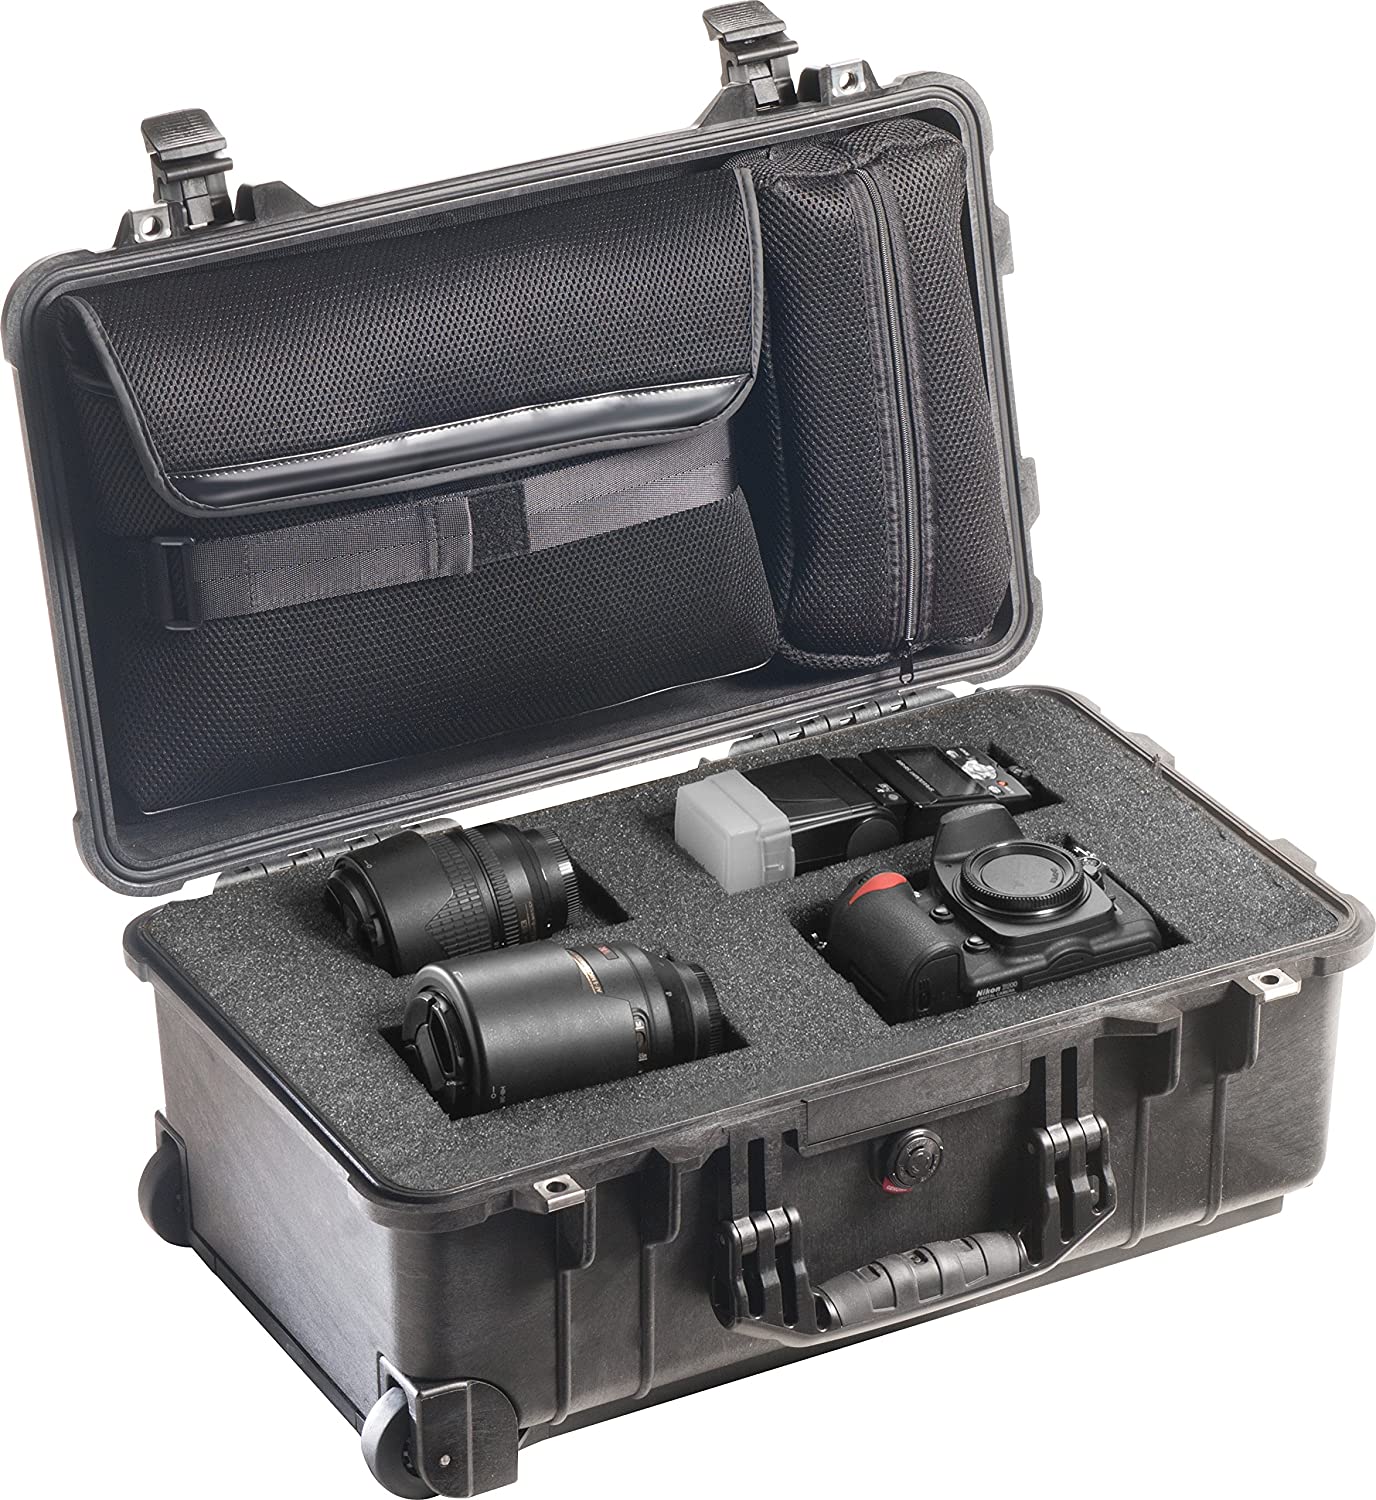 Travel friendly video camera bag- Pelican 1510 image 